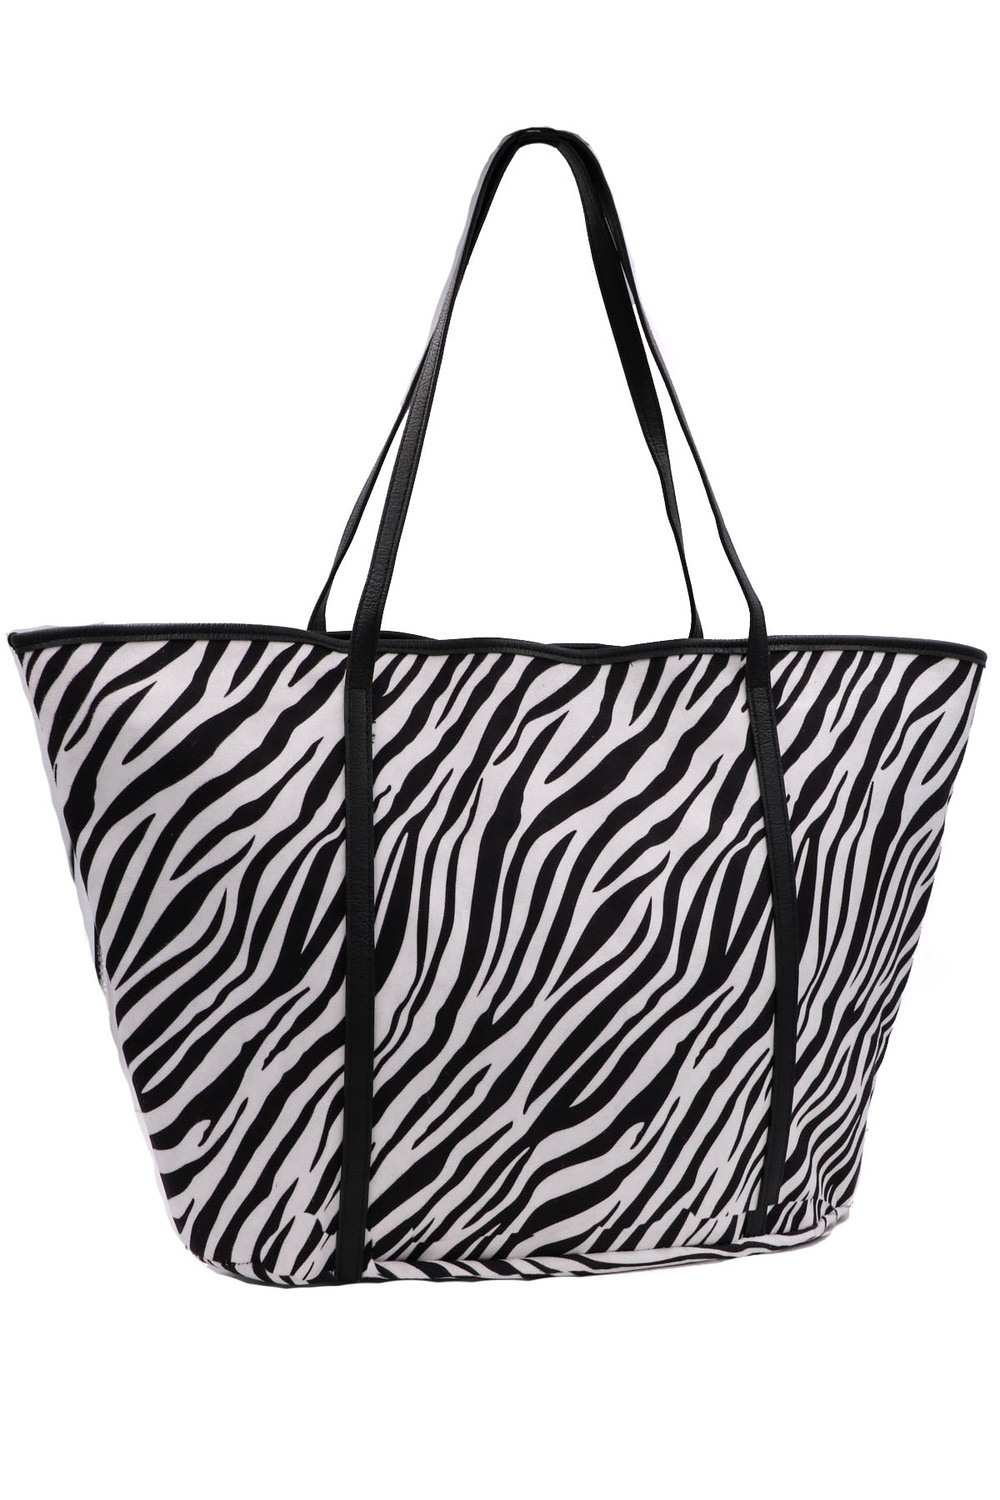 ZEBRA Zebra Tote Bag - Bags & Clutches